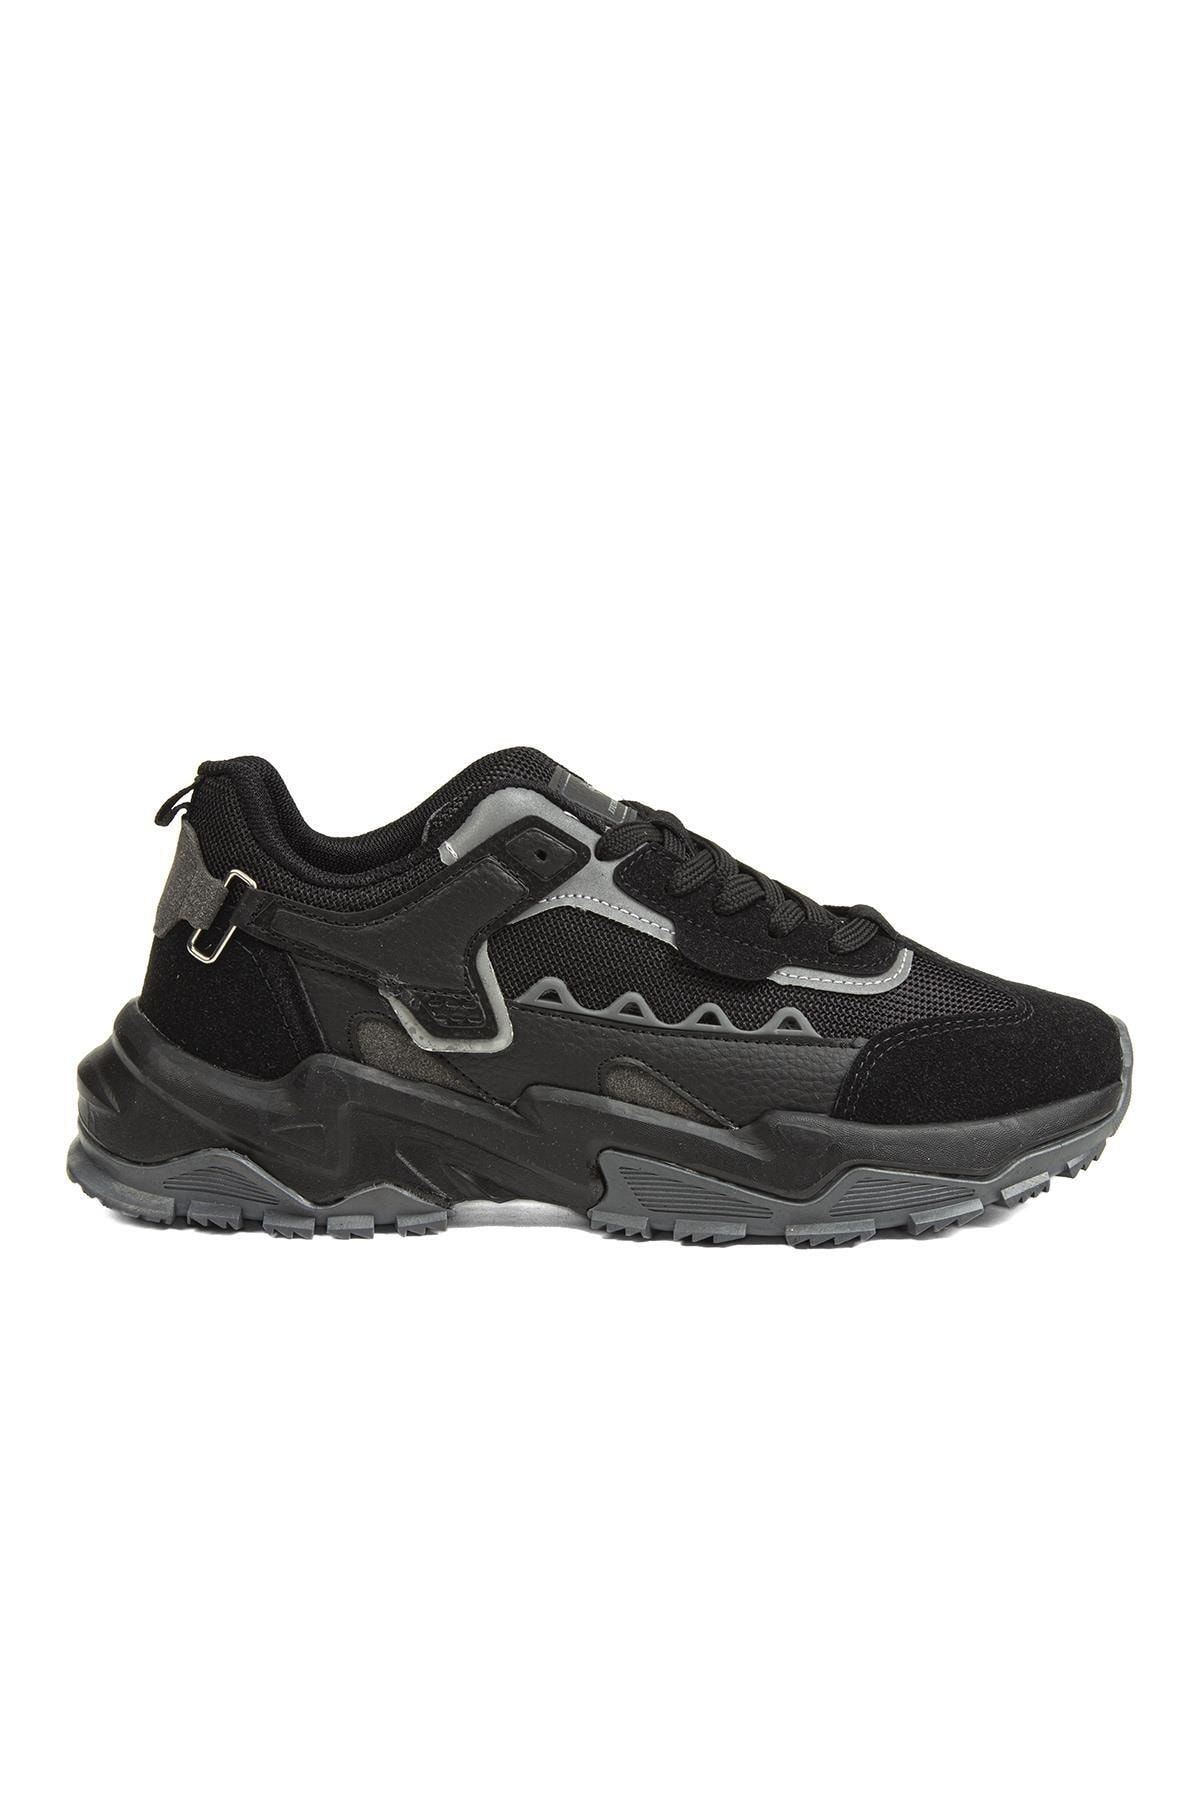 Dunlop ® | Dnp-1753-3511 Siyah - Erkek Spor Ayakkabı